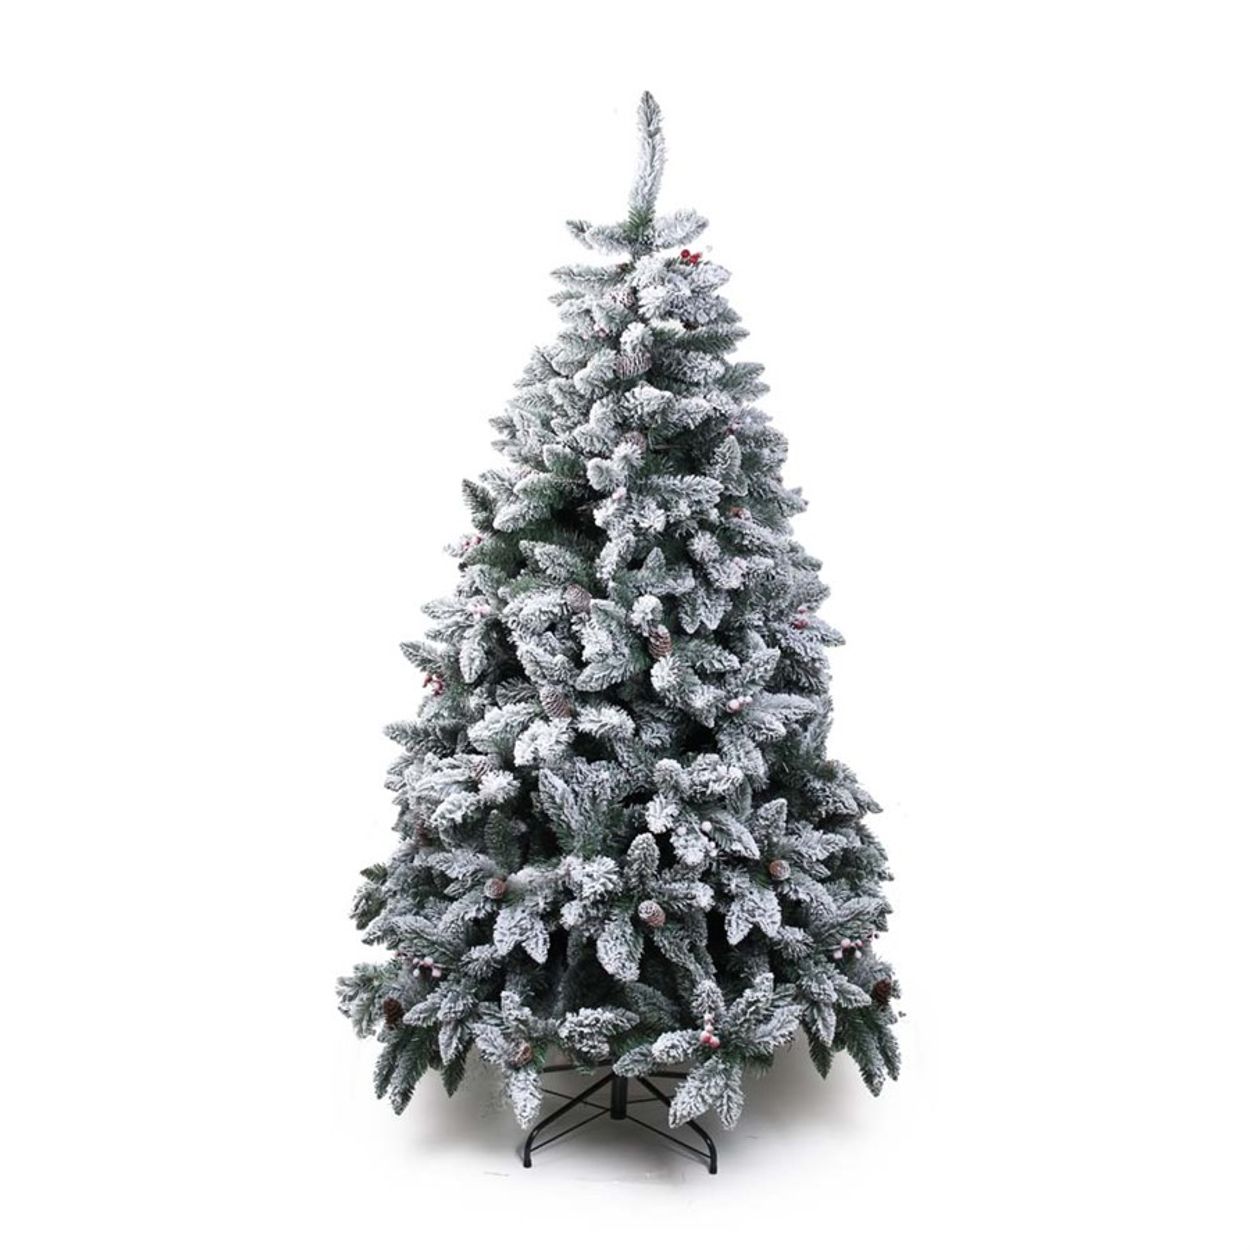 Árvore de Natal Portobelo Verde Base Plástica 1,80m com 645 Hastes - Natal  da 25